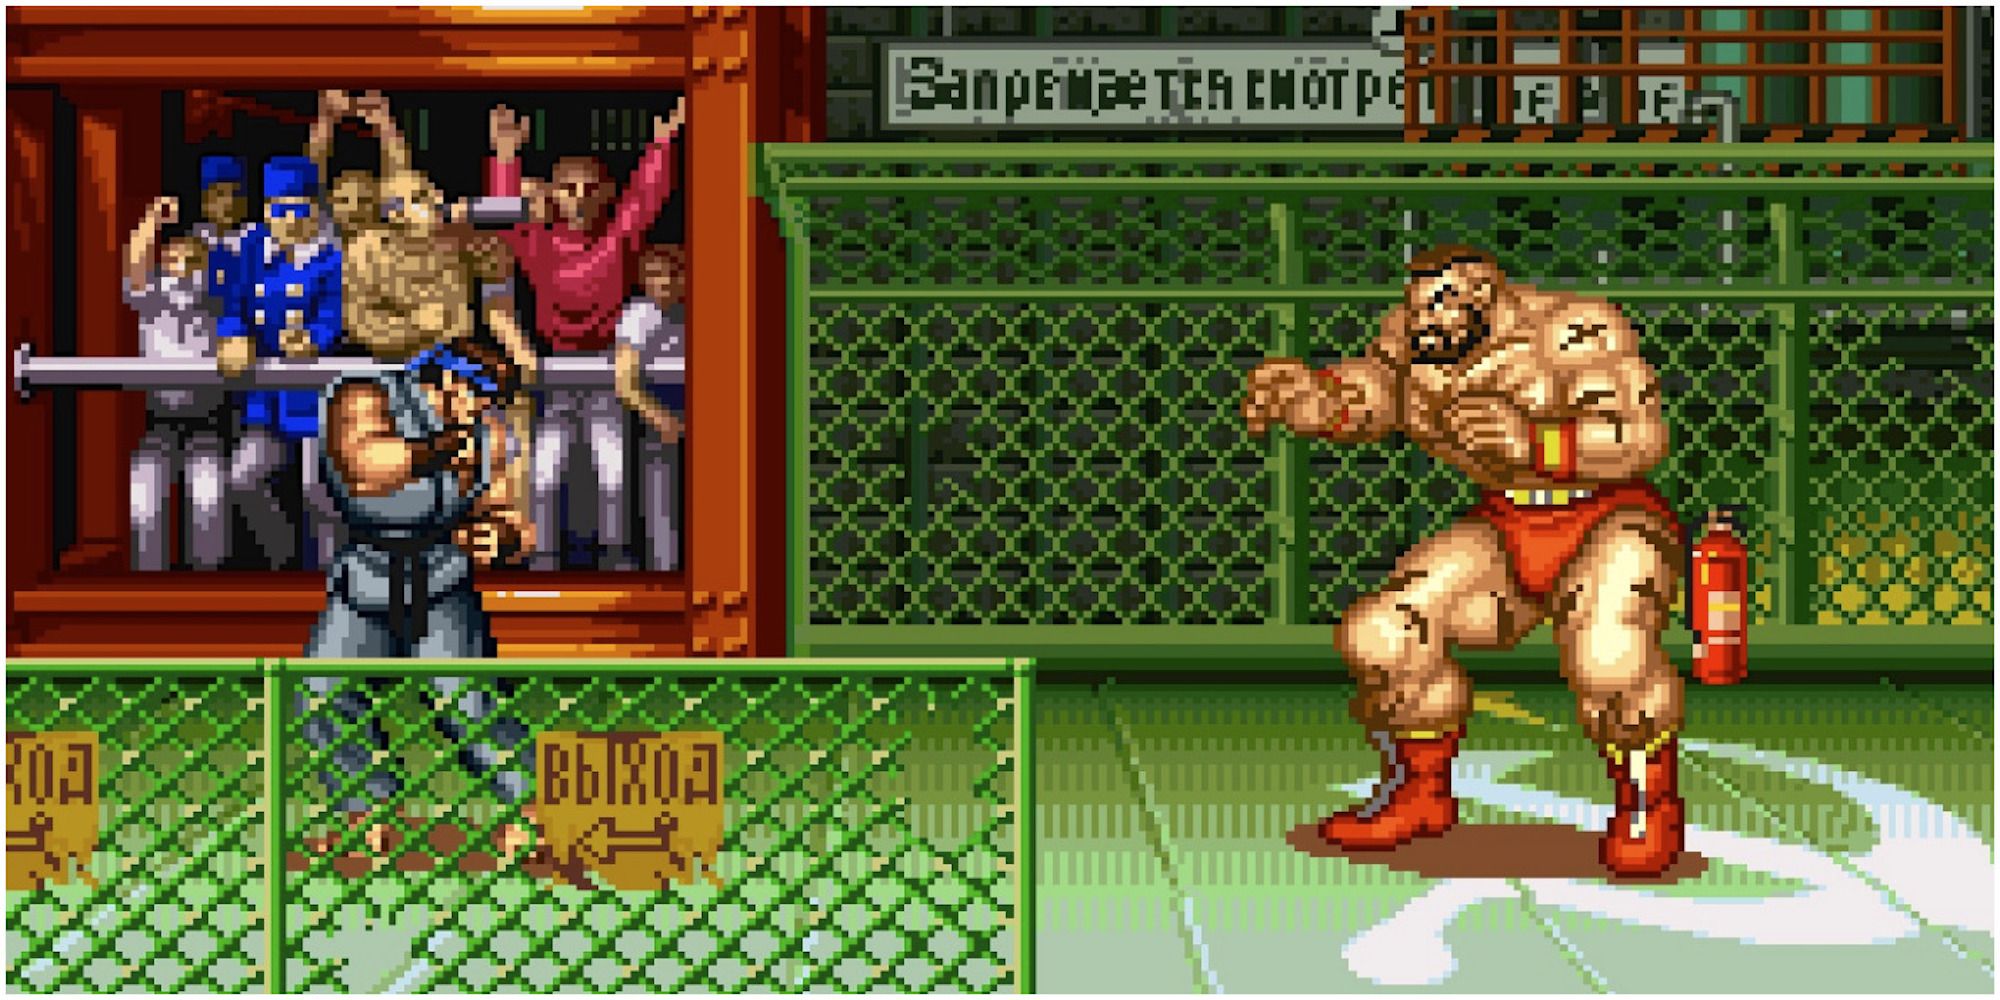 fighting a match in Street Fighter II